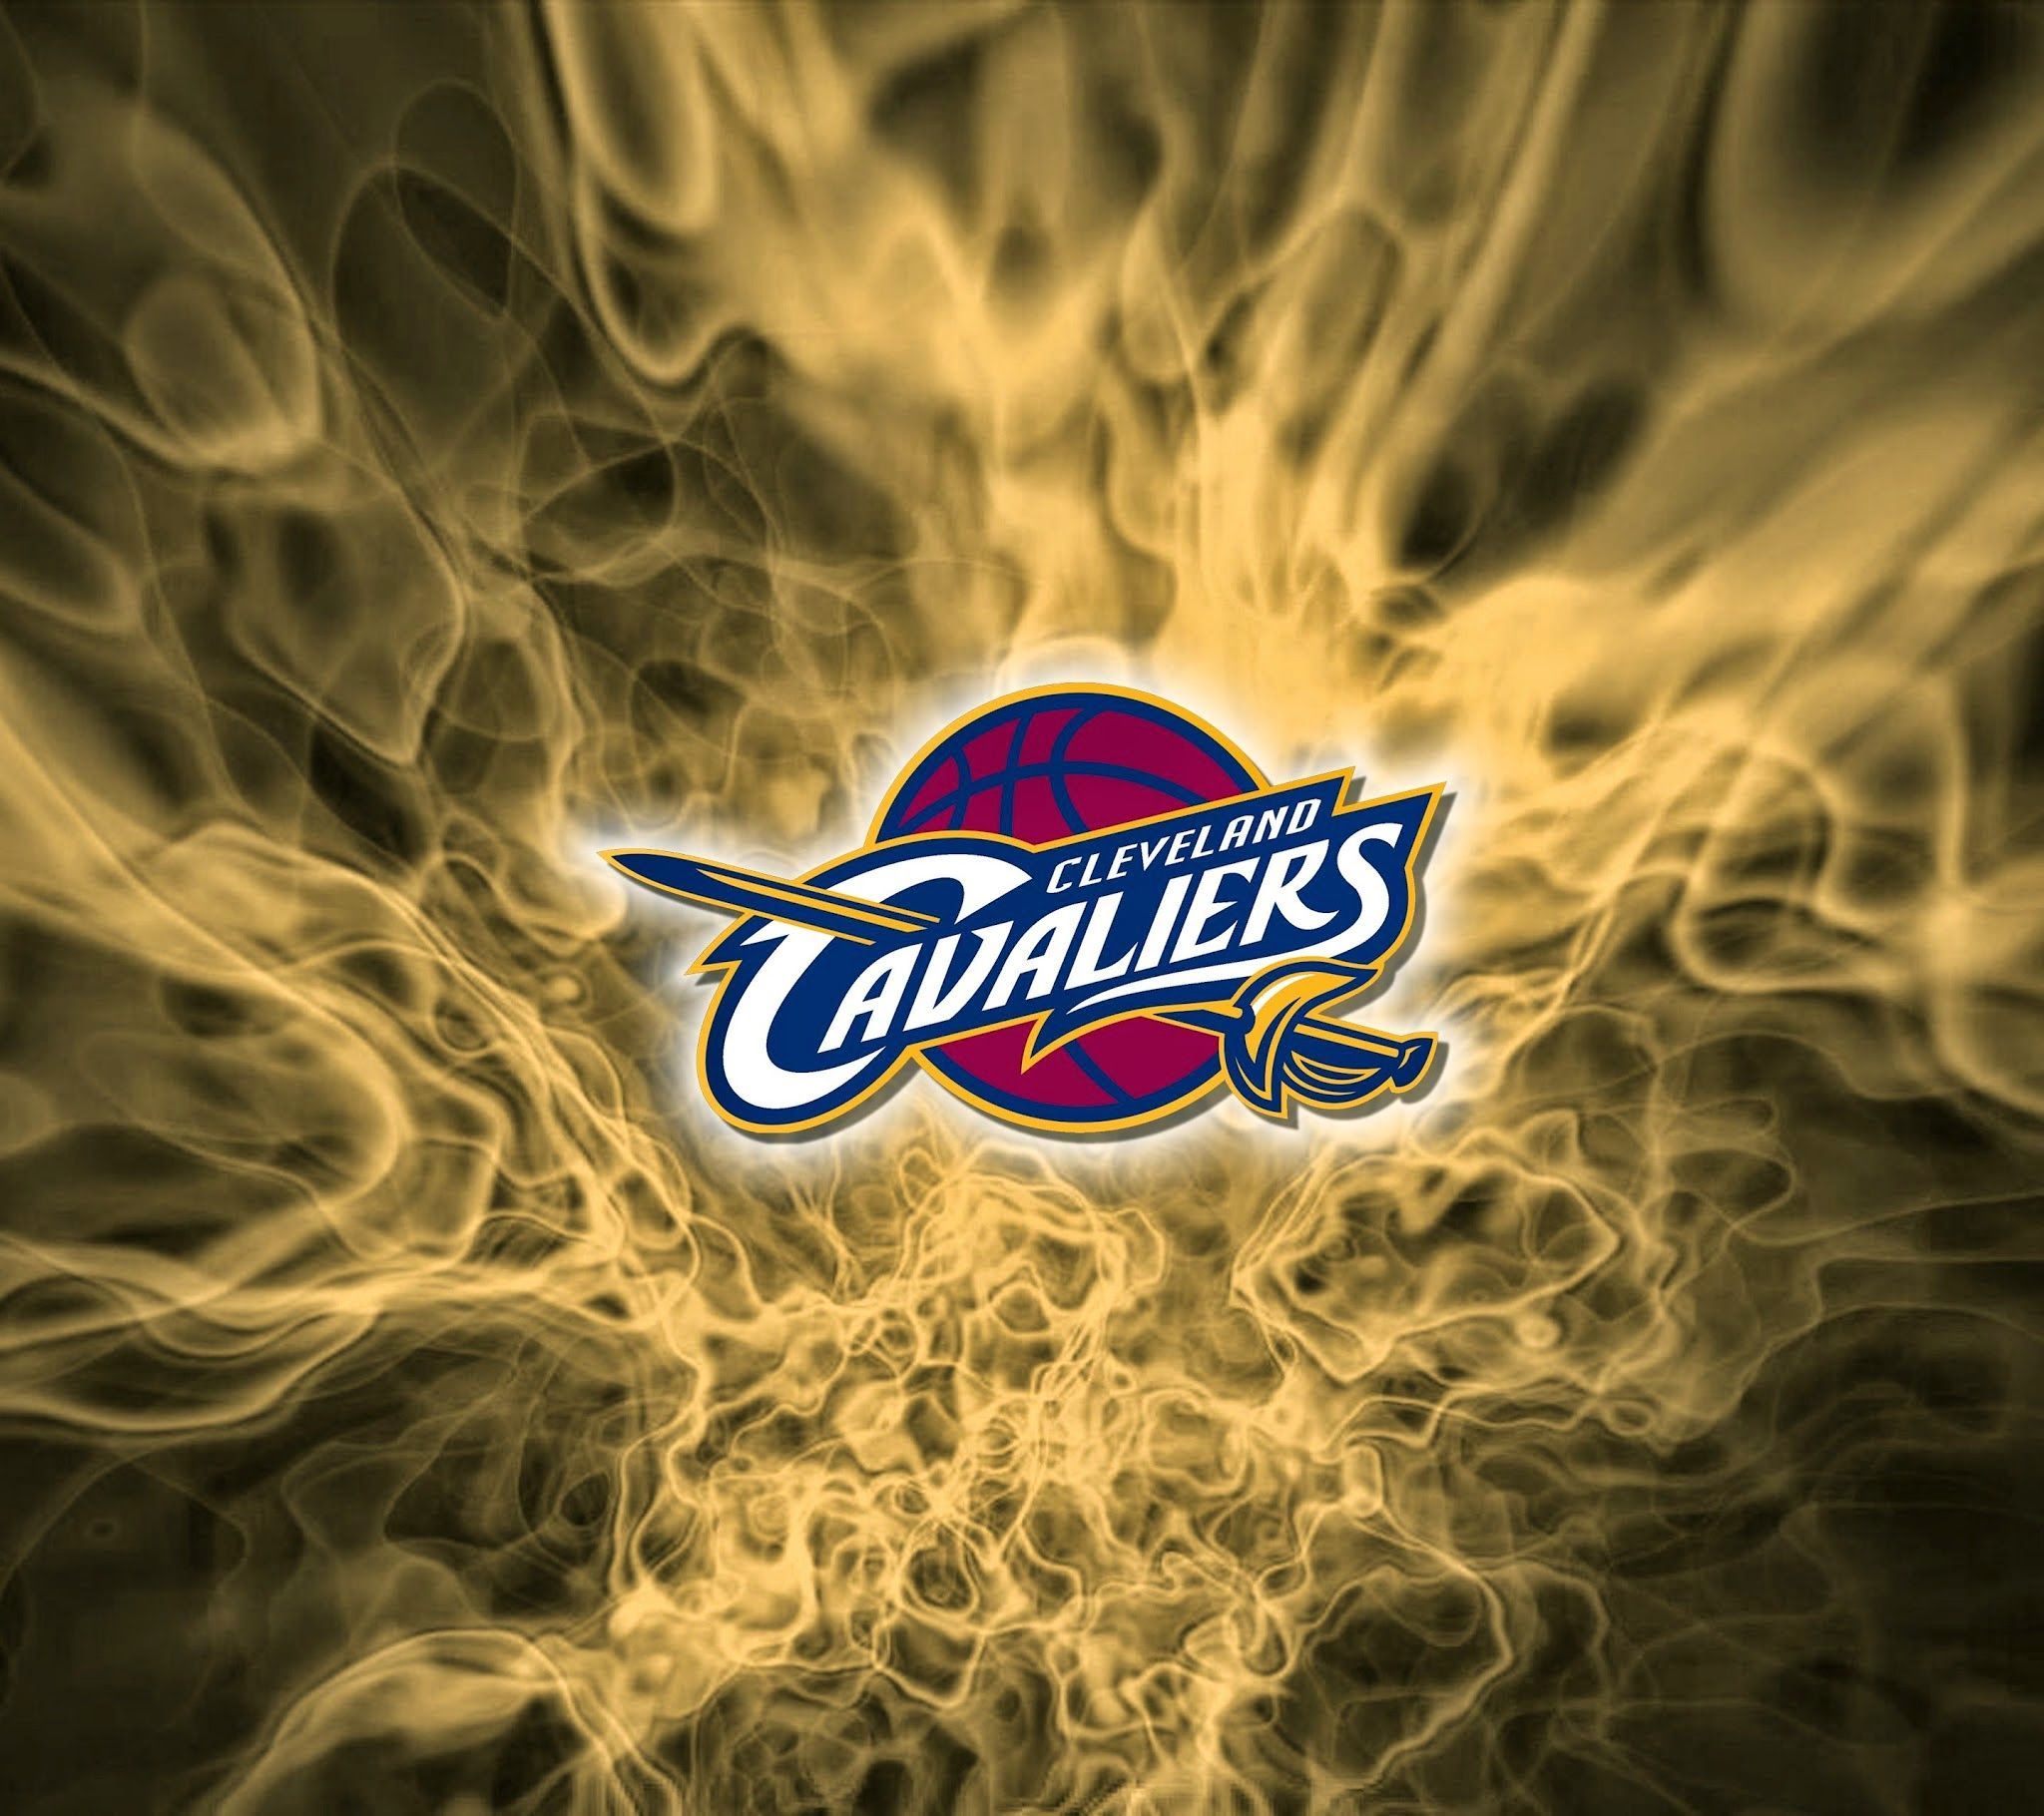 Cleveland Cavaliers Logo 2015 - wallpaper.